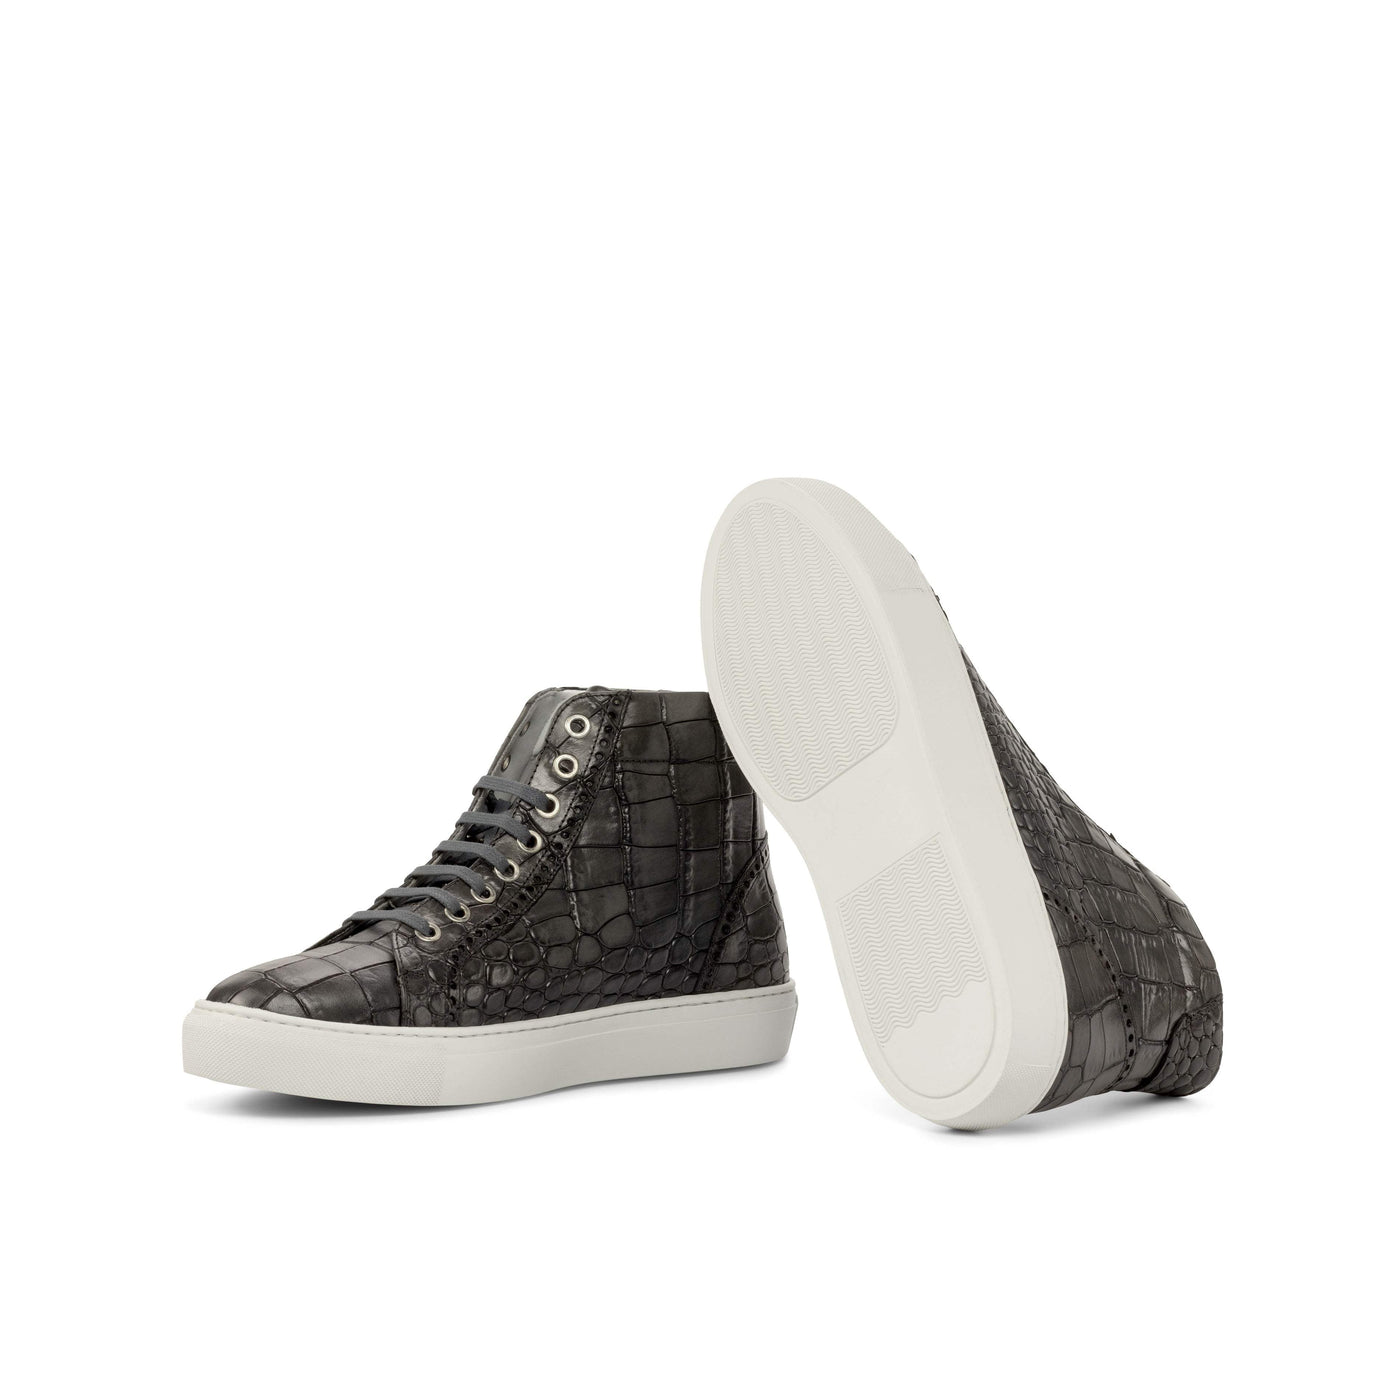 Men's High Kick Sneakers Leather Grey 4904 2- MERRIMIUM